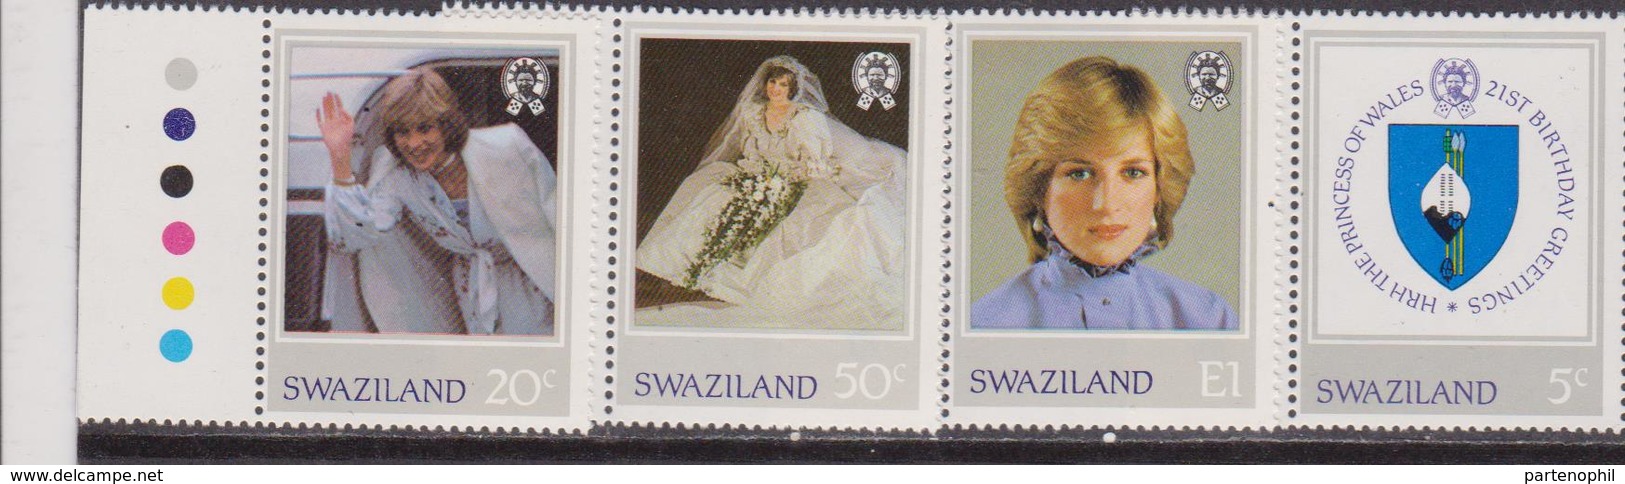 1982 Princess Diana 21st Birthday MNH Stamp Set Swaziland SG 404-407 - Case Reali